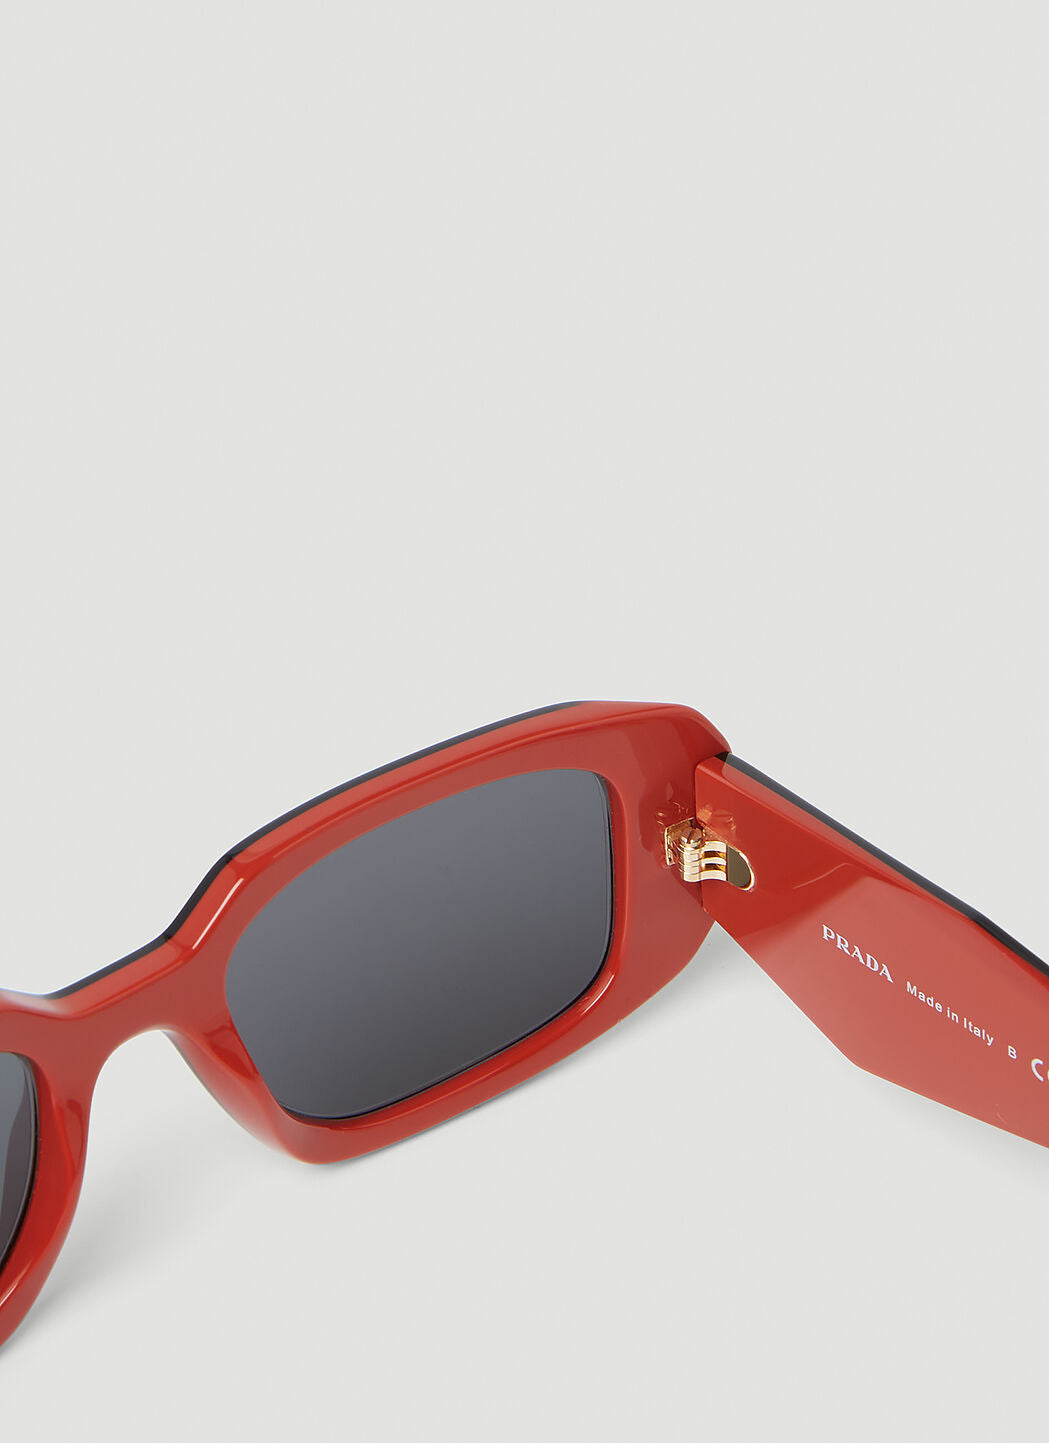 Prada PR17WS-12N5S0-49  New Sunglasses